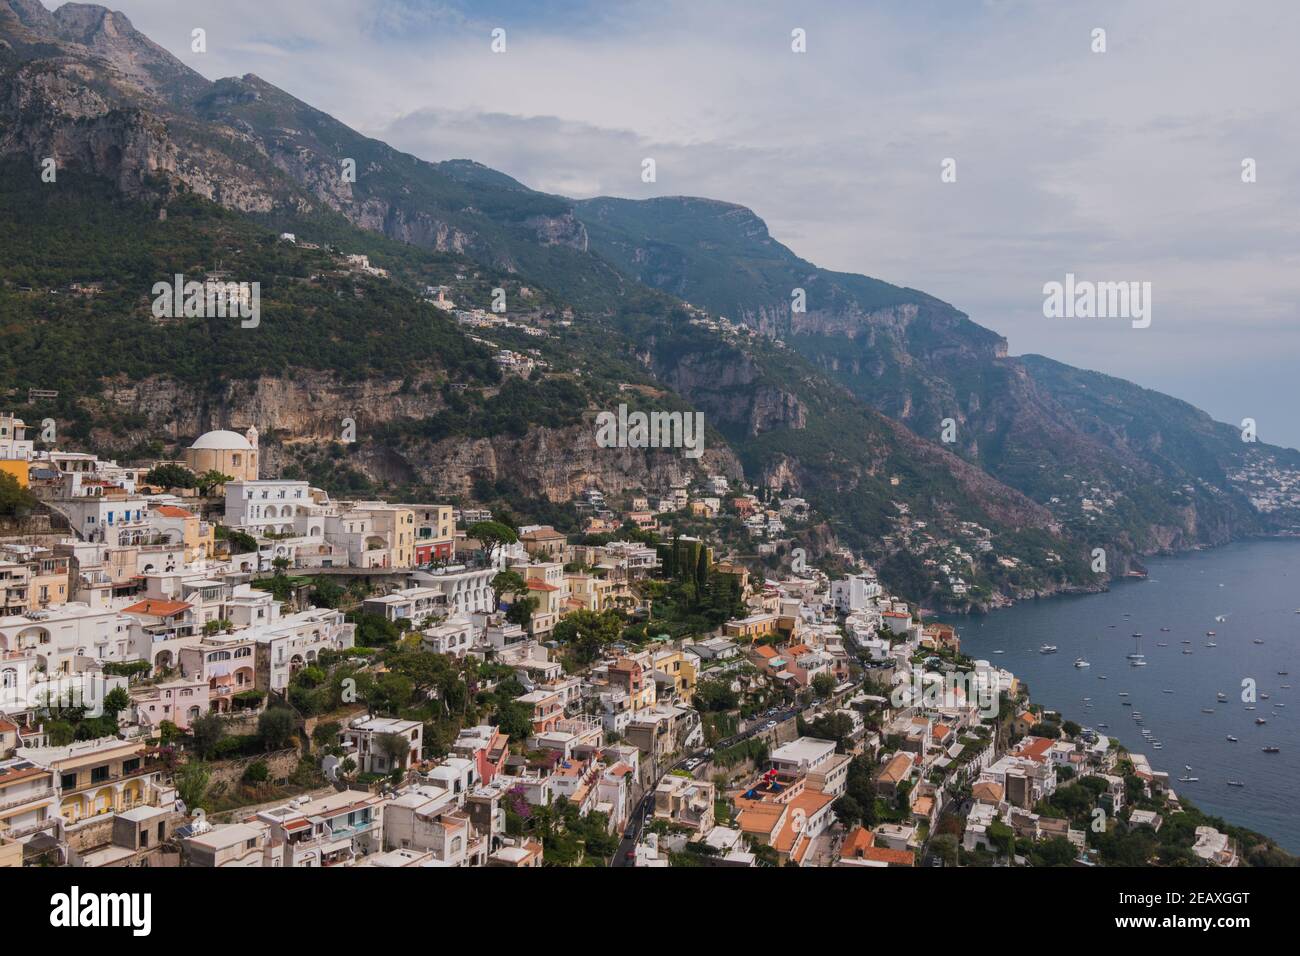 View over the village of Positano, sitting on the cliffside of the Amalfi Coast, Italy, overlooking the Tyrrhenian Sea. Stock Photo